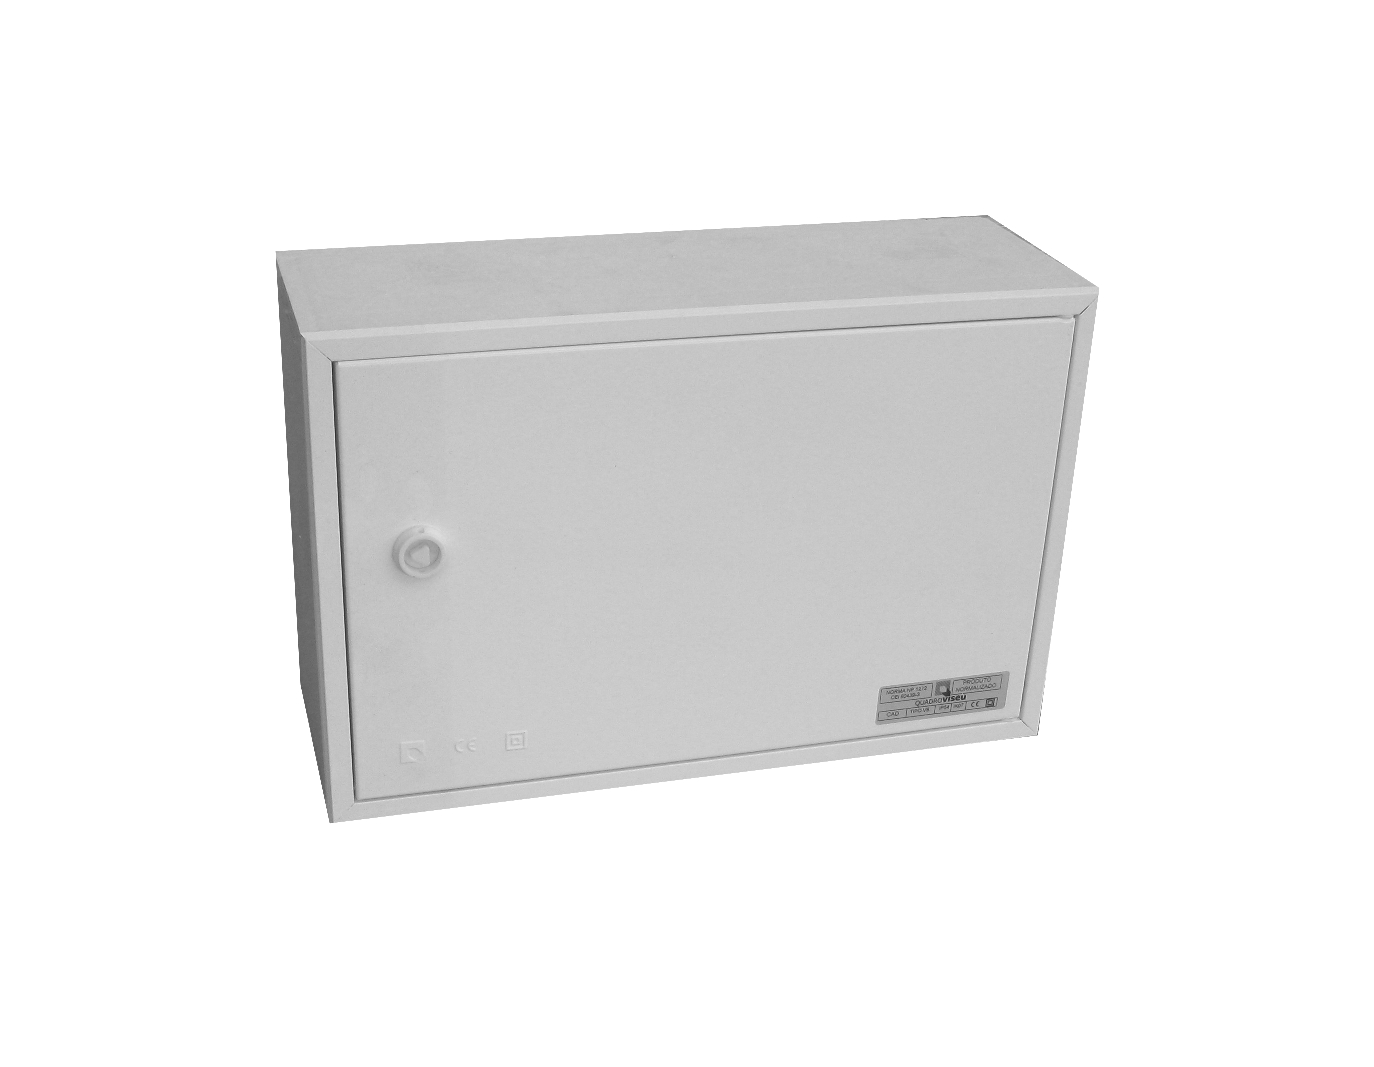 EMPTY EXTERNAL VISBOX BOX WITH DOOR AND FRAME 320X250X130